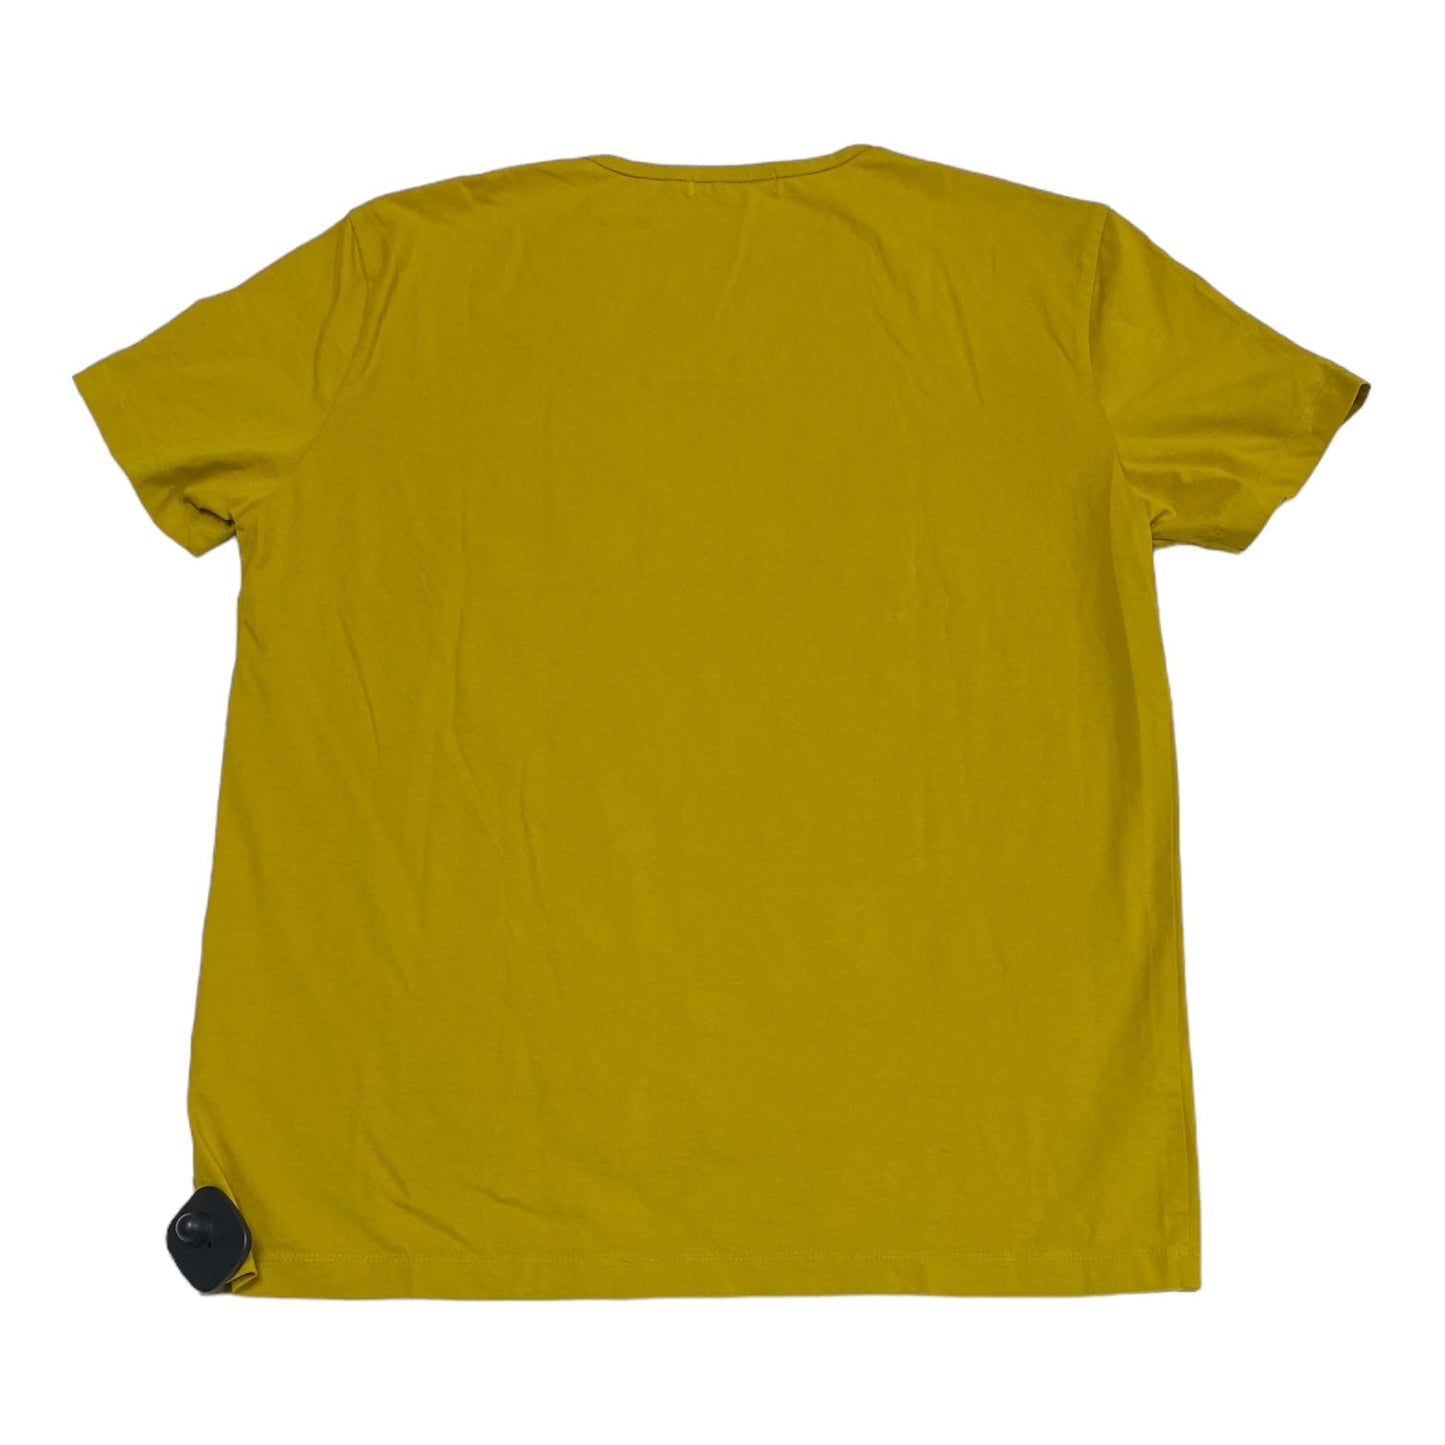 Yellow Top Short Sleeve Emporio Armani, Size Xxl